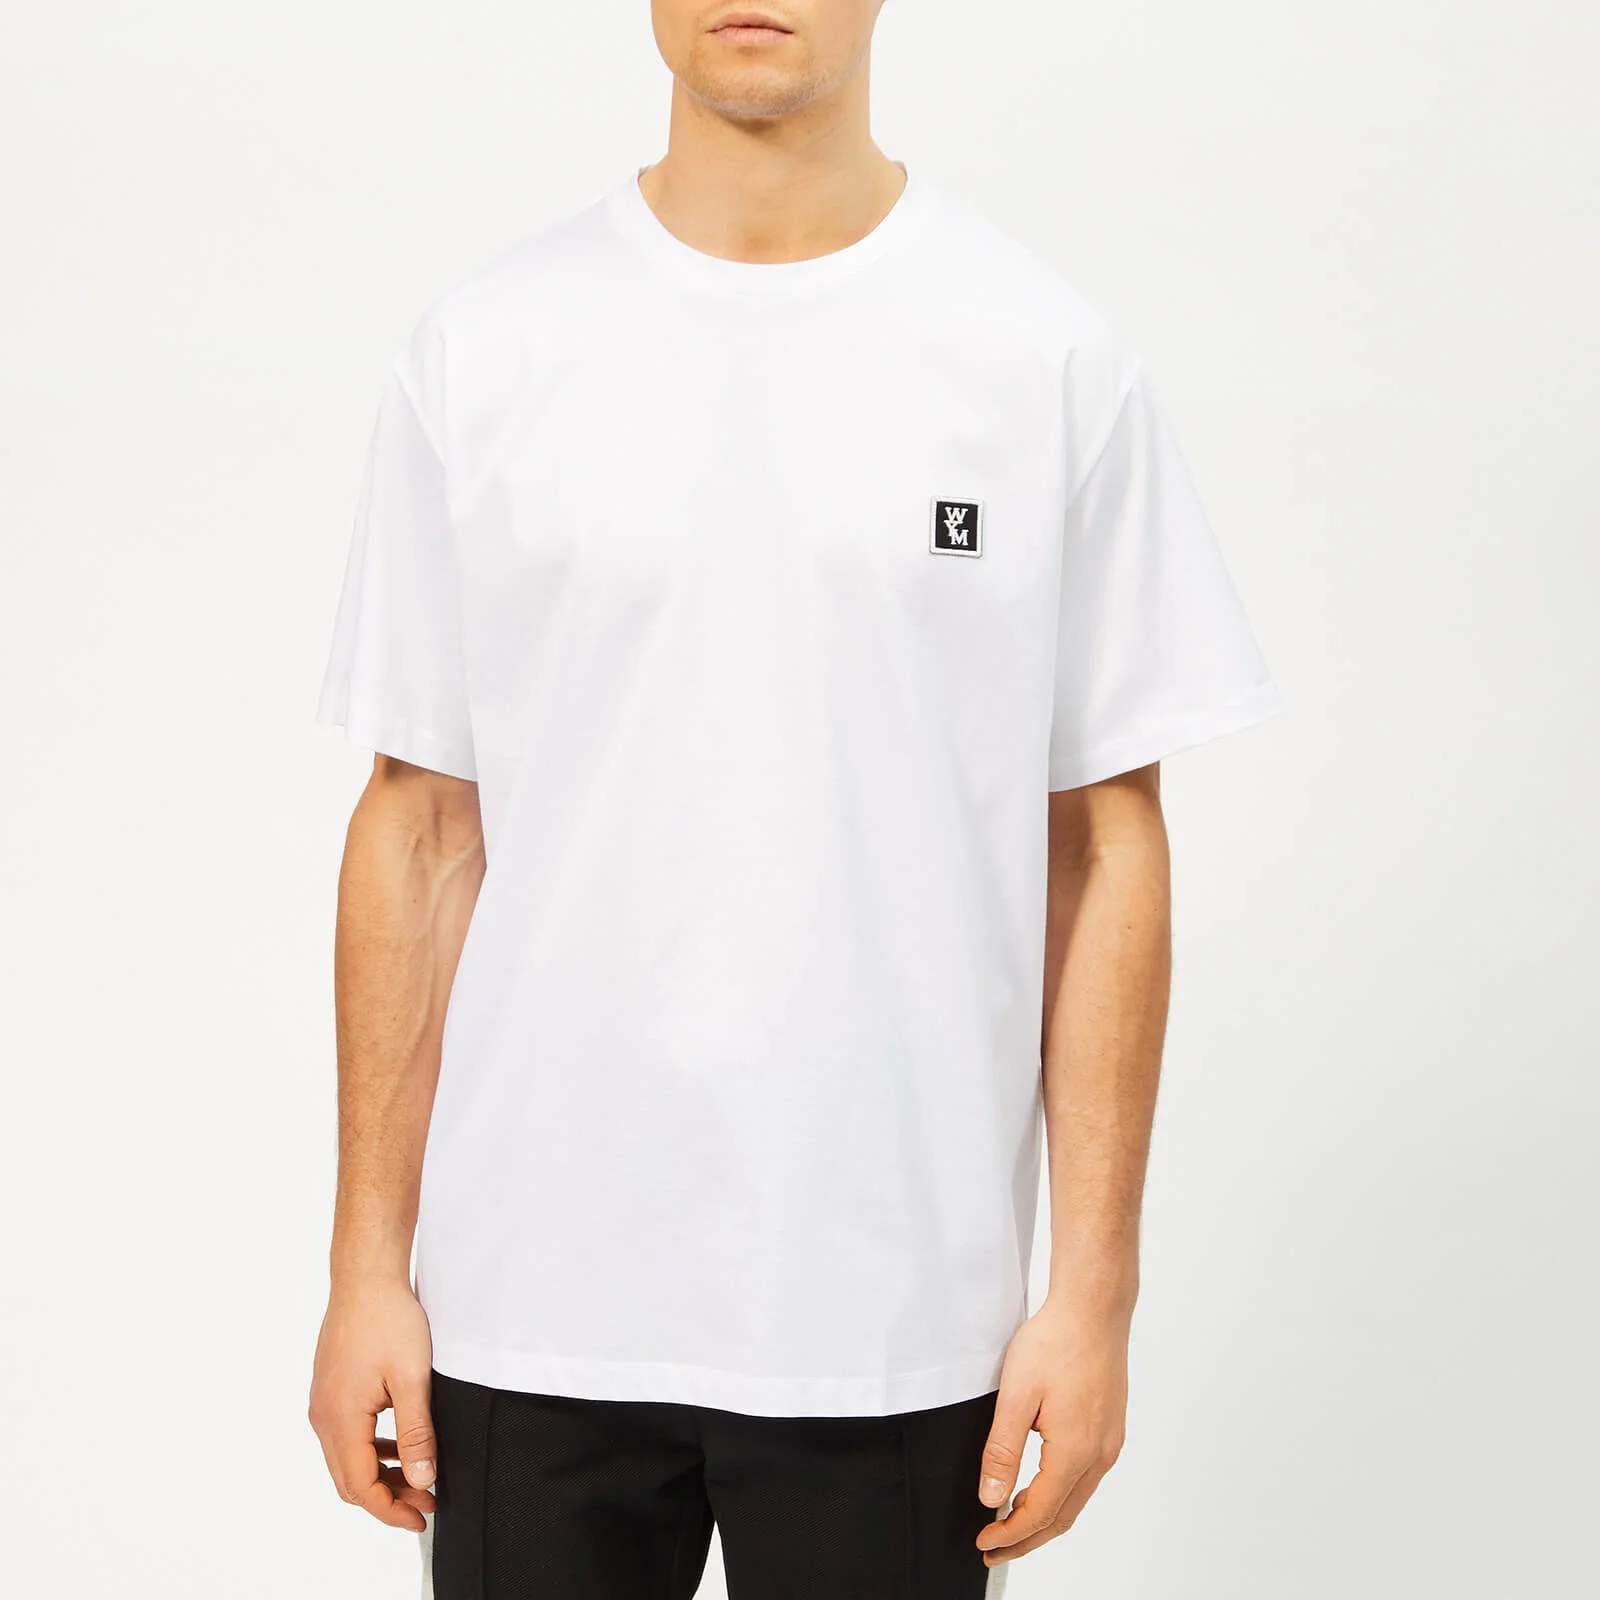 Wooyoungmi Men's Basic T-Shirt - White Image 1